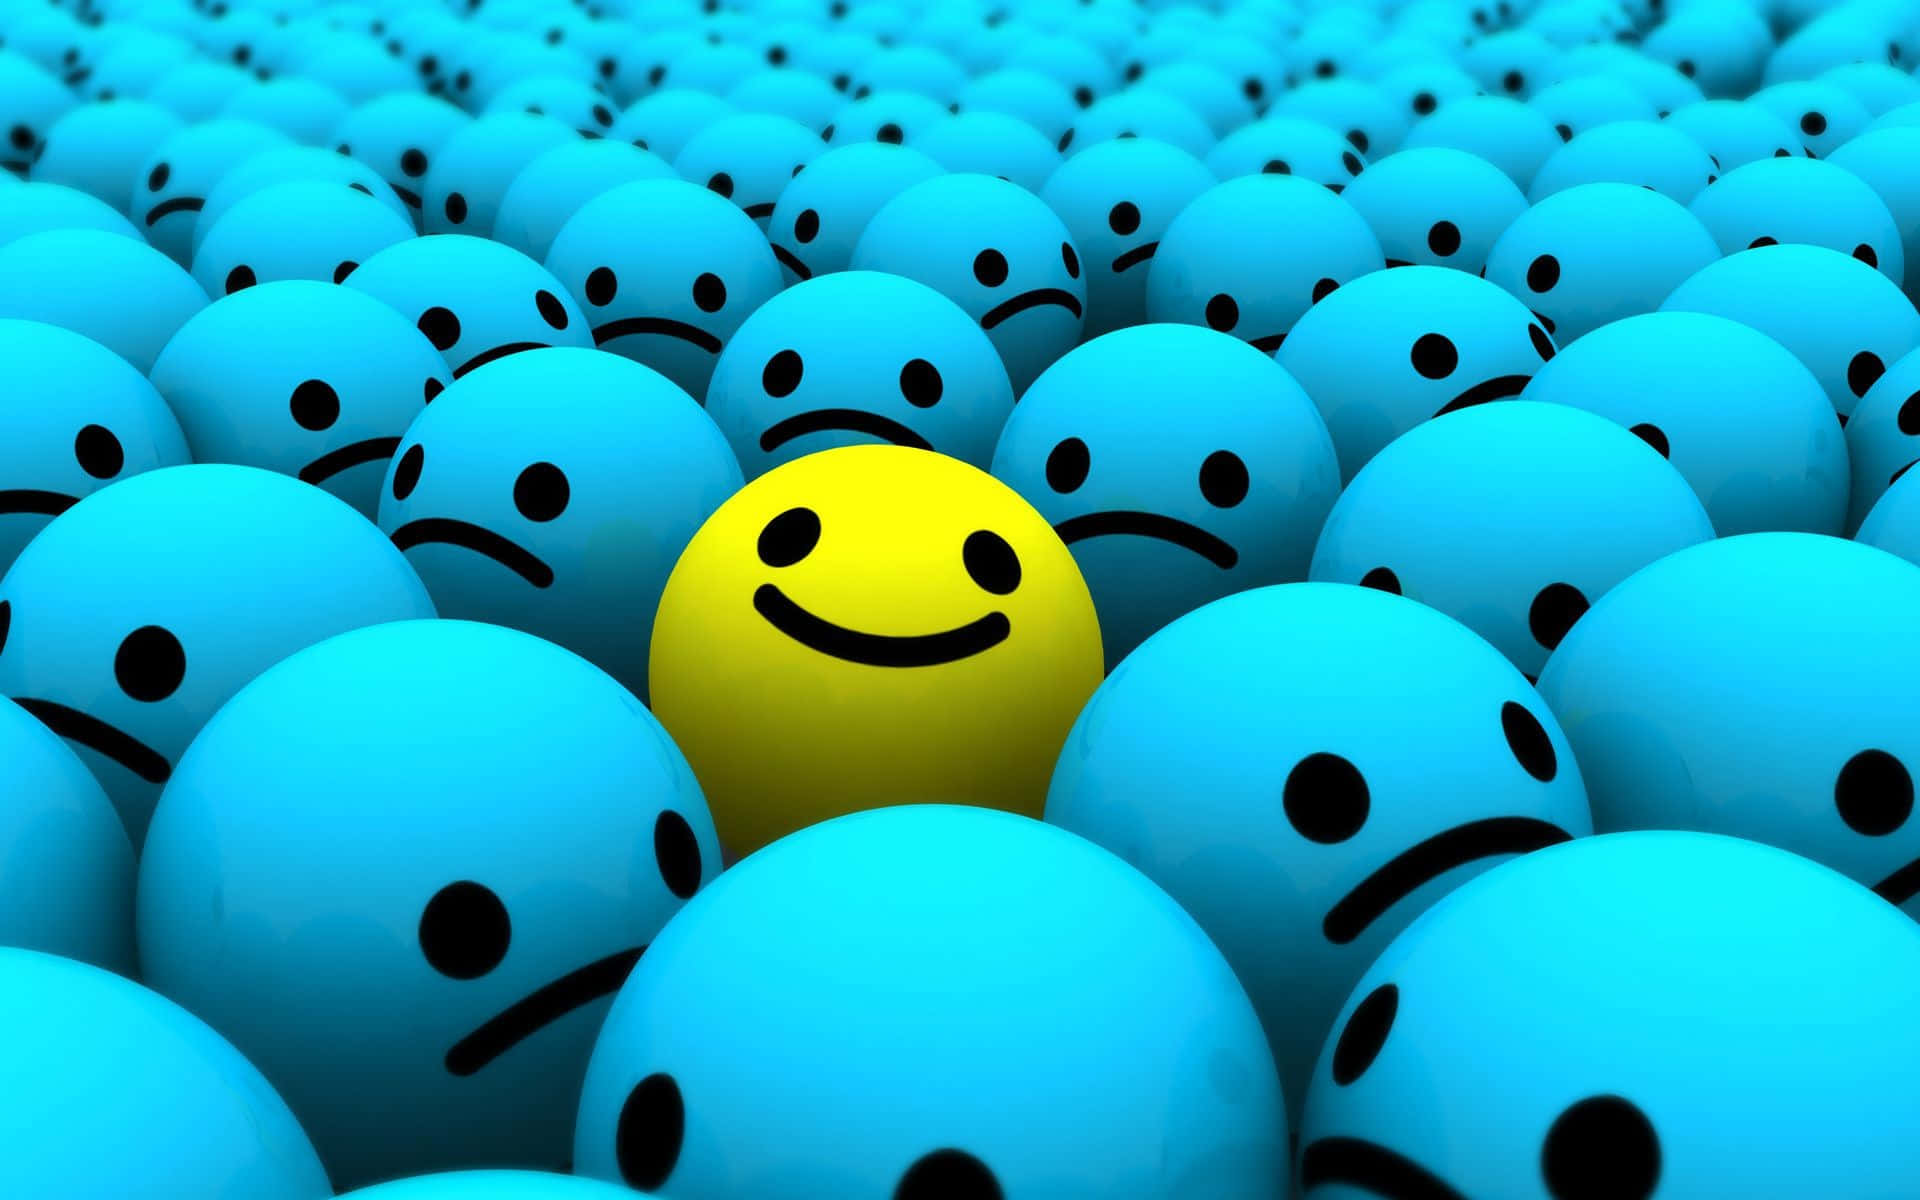 Emanating Joy - The Happy Smile Ball Wallpaper